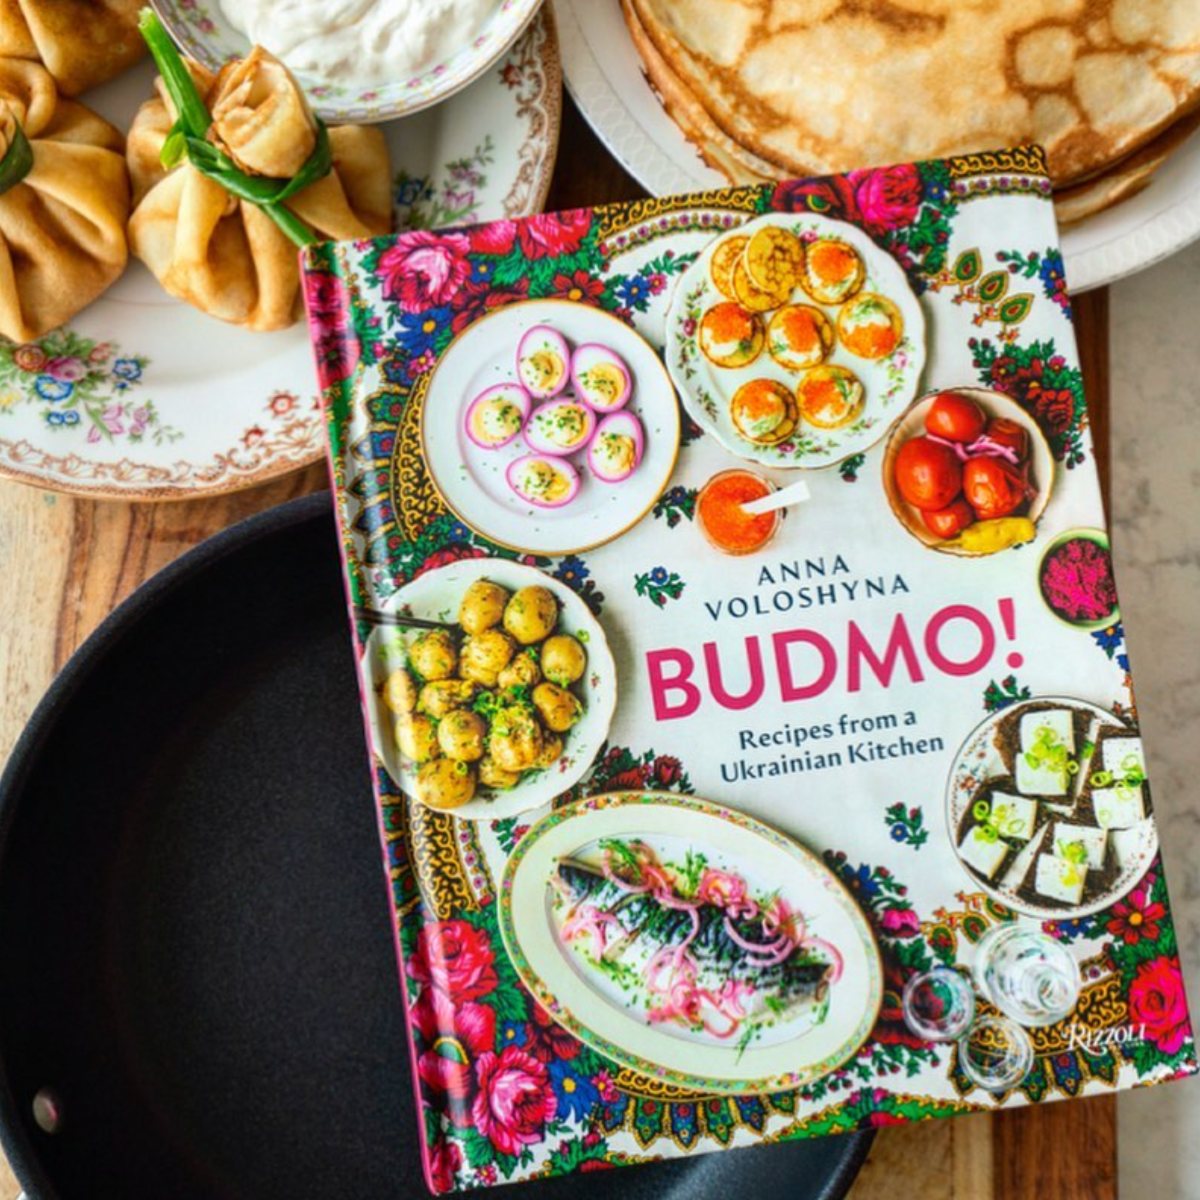 BUDMO! Recipes from a Ukrainian Kitchen by Chef Anna Voloshyna